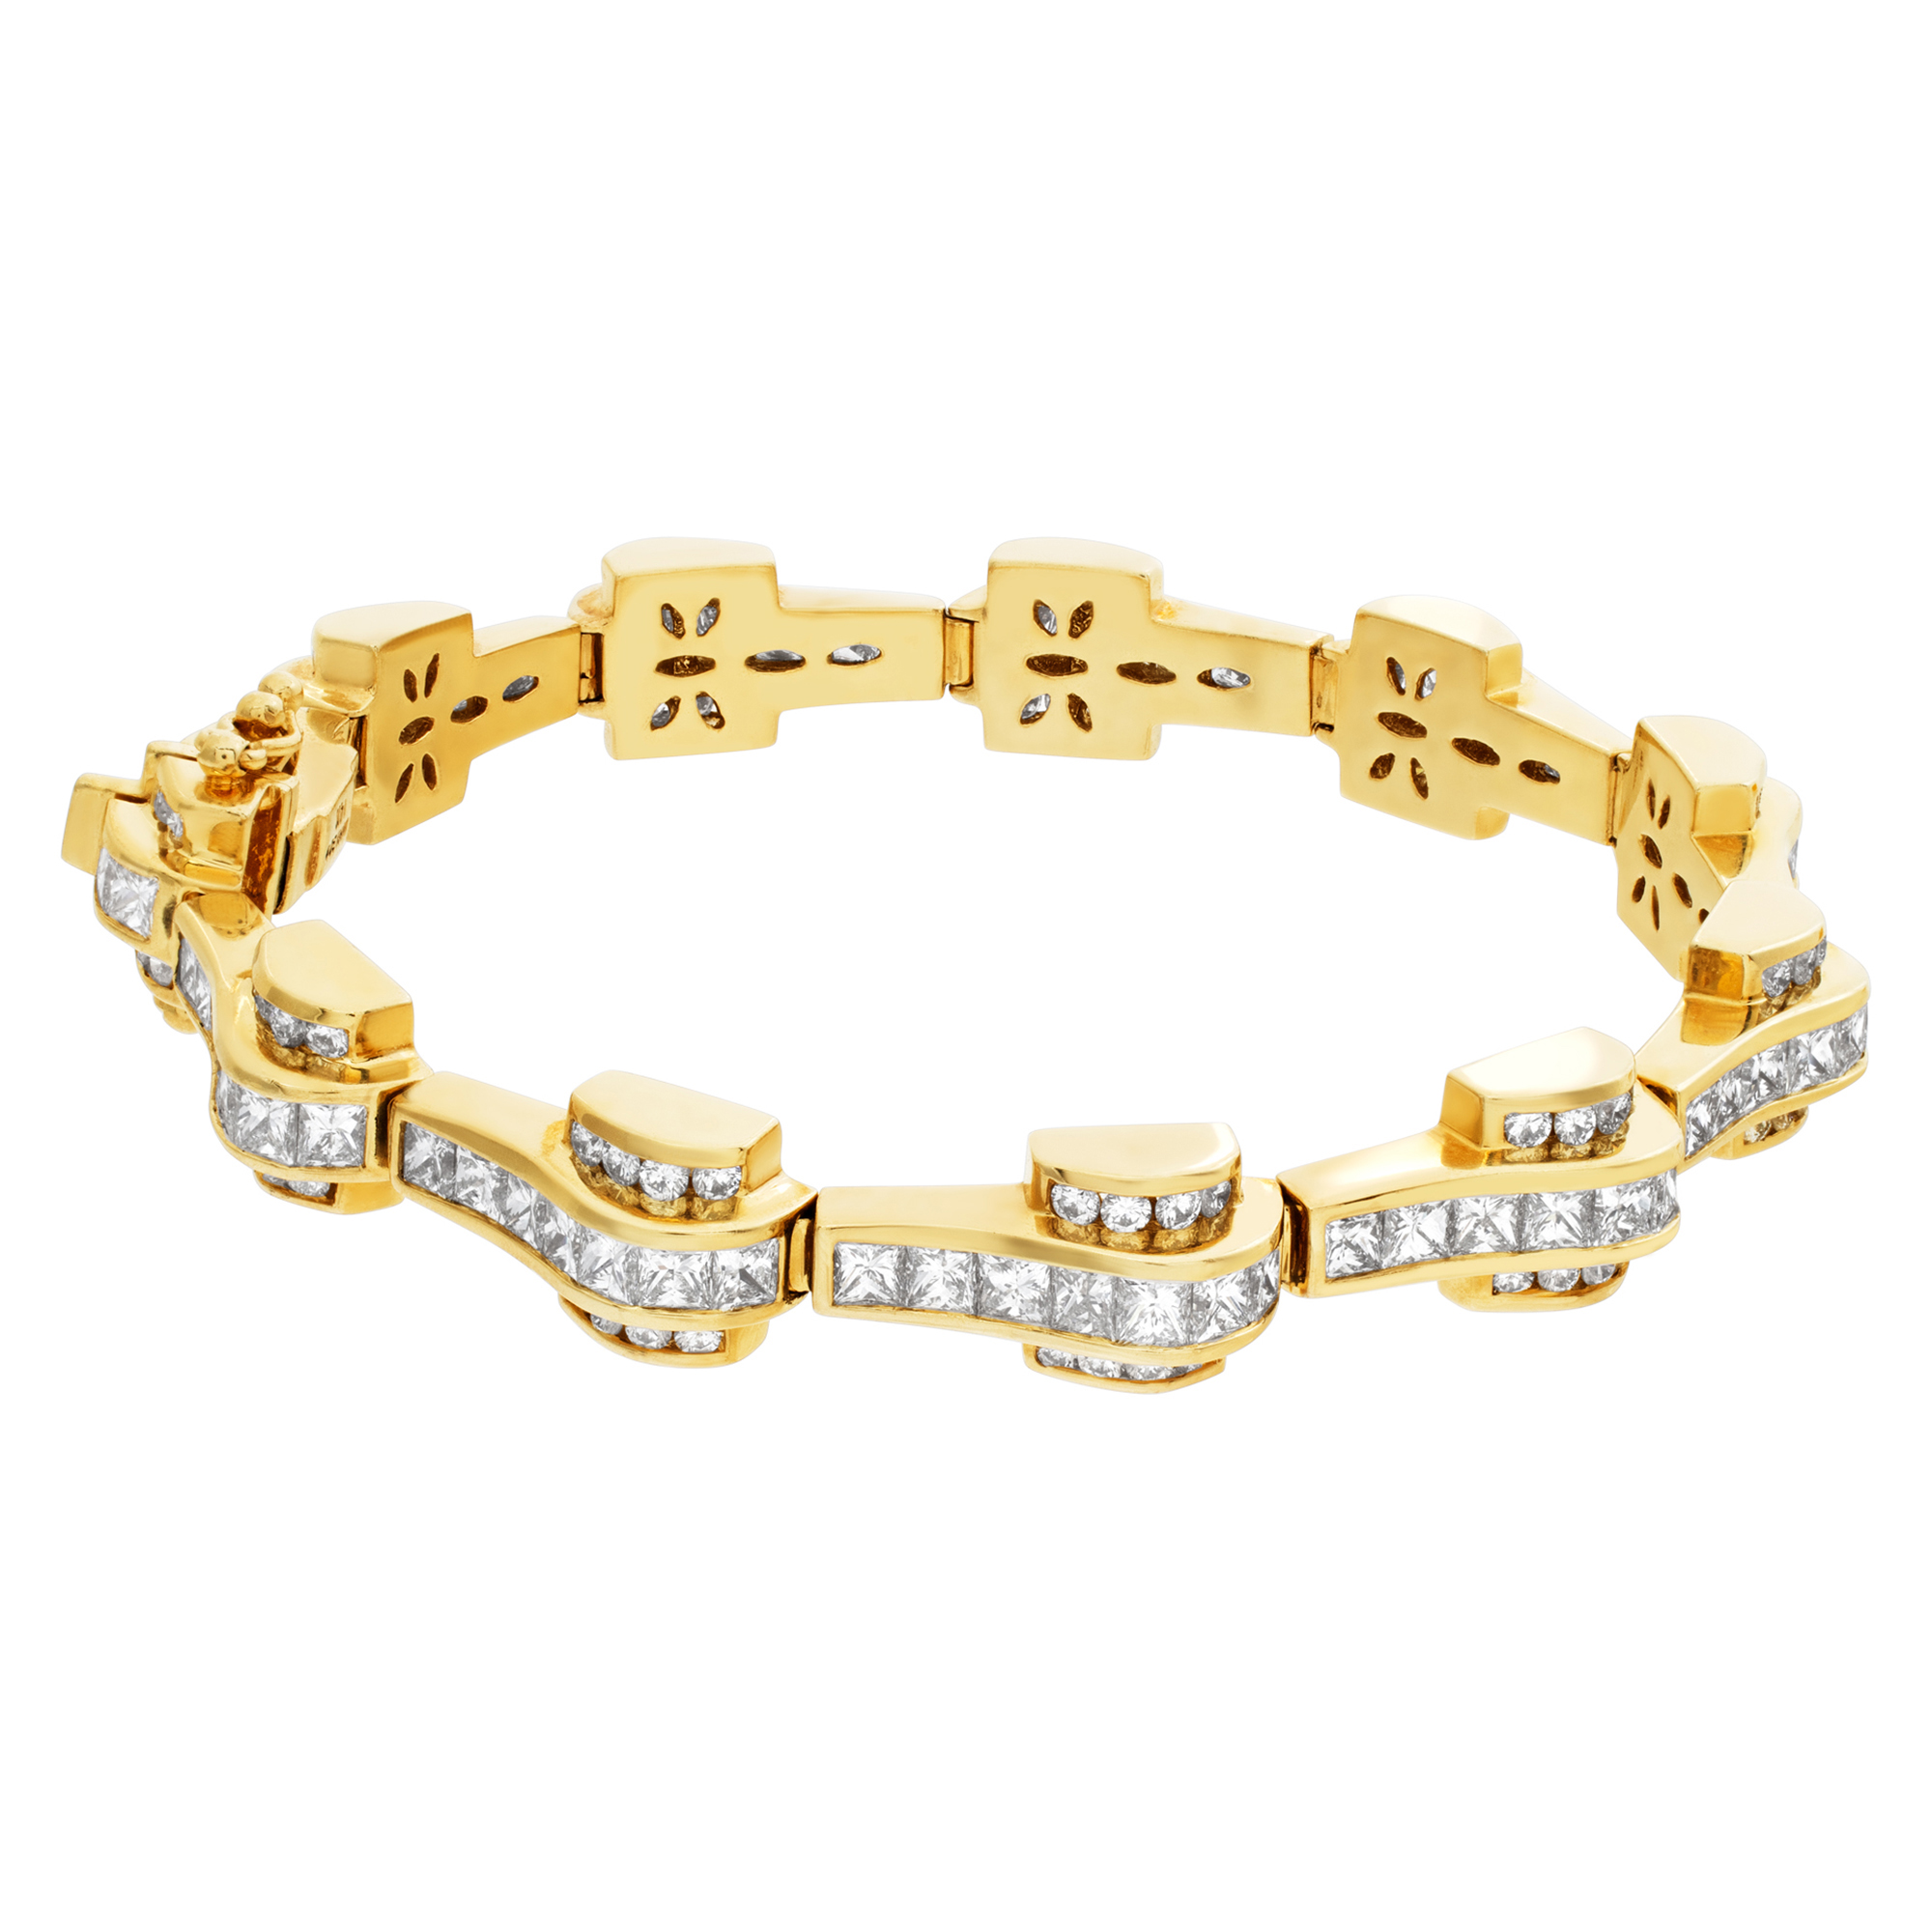 Stylish link & diamonds 14K yellow gold bracelet with over 8.25 carats princess and full cut round brilliant diamonds